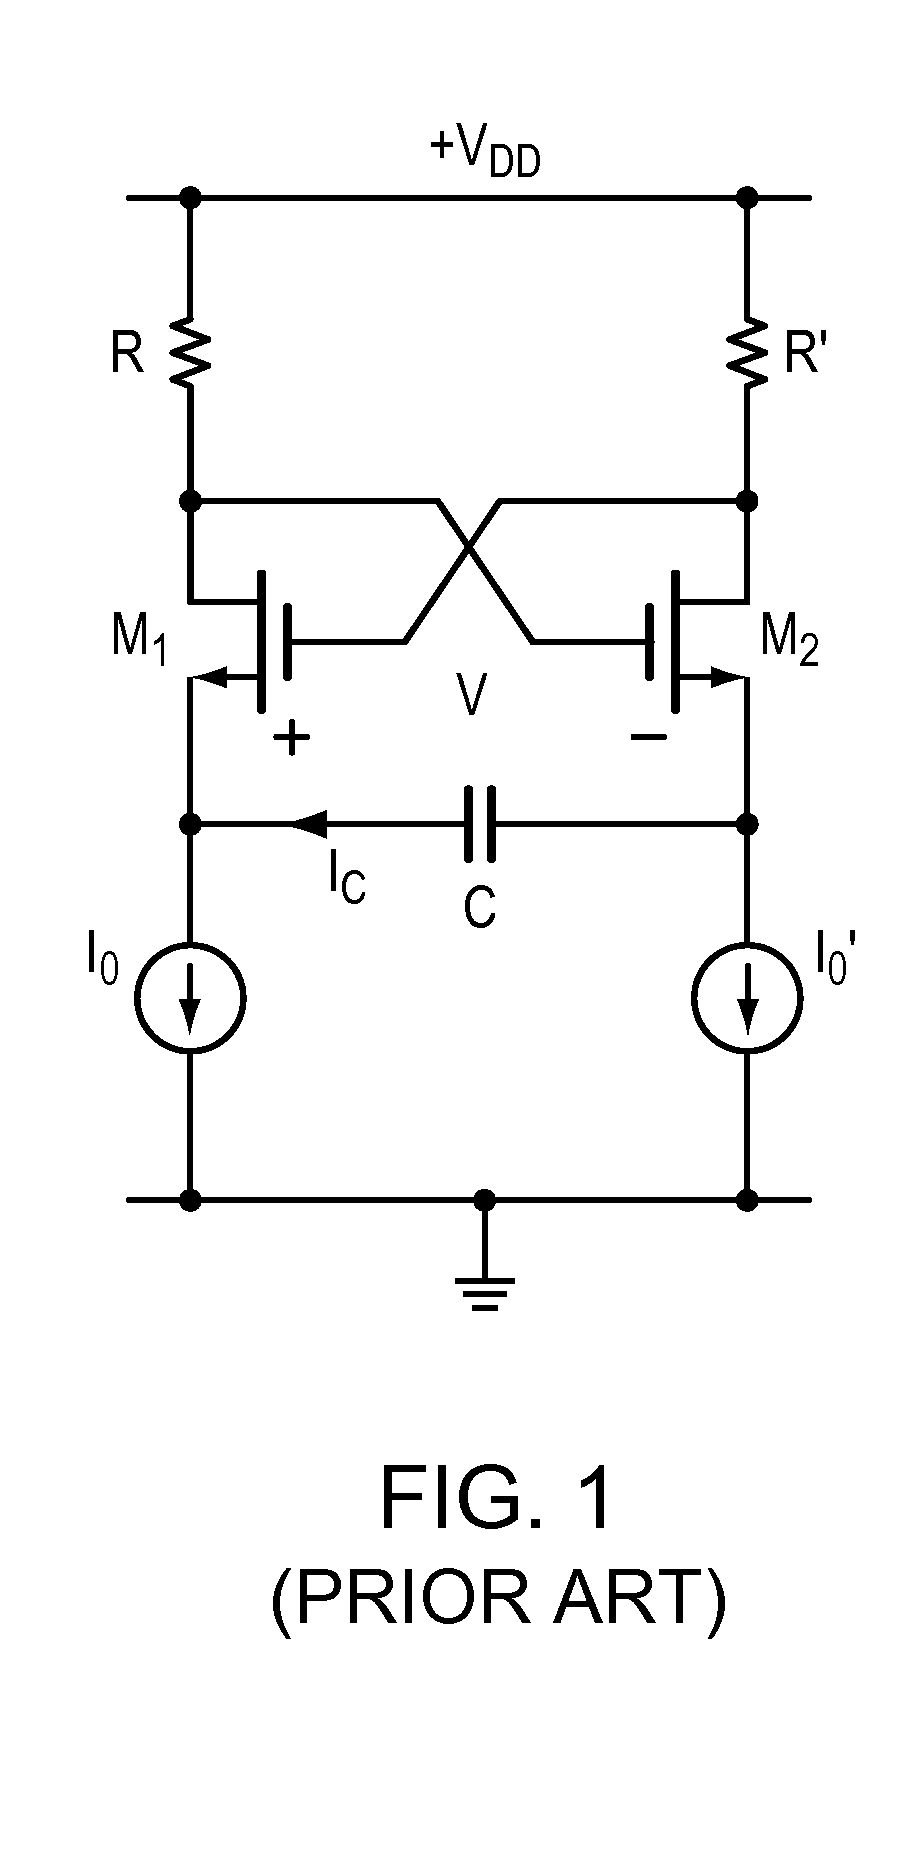 Constant gm oscillator